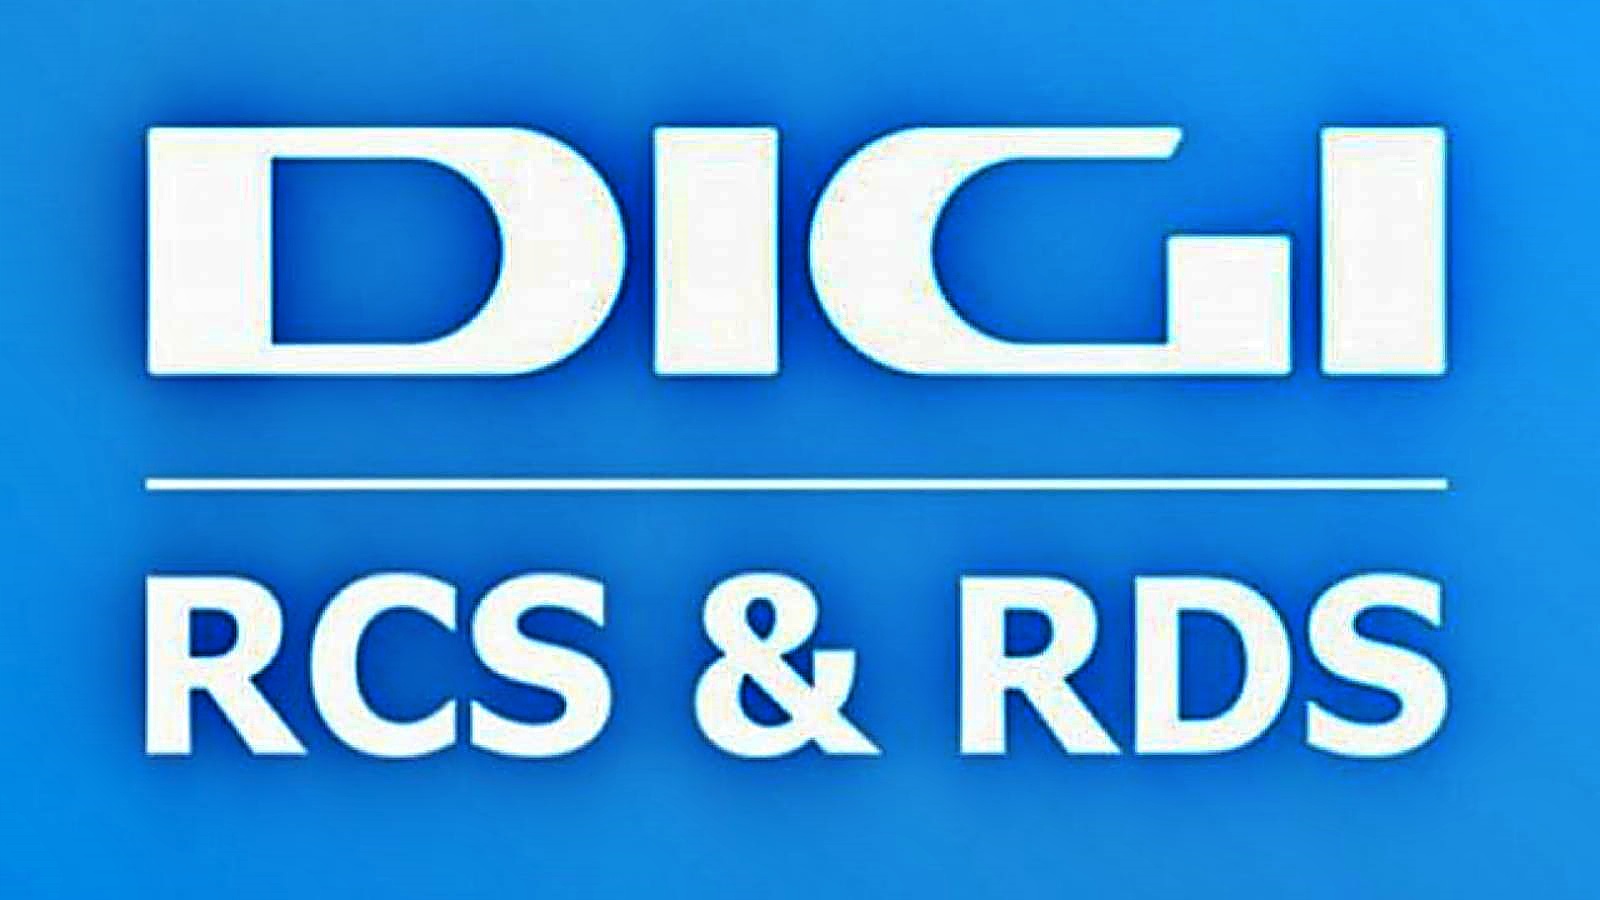 Informarea DIGI RCS & RDS Transmis OFICIAL Romanilor